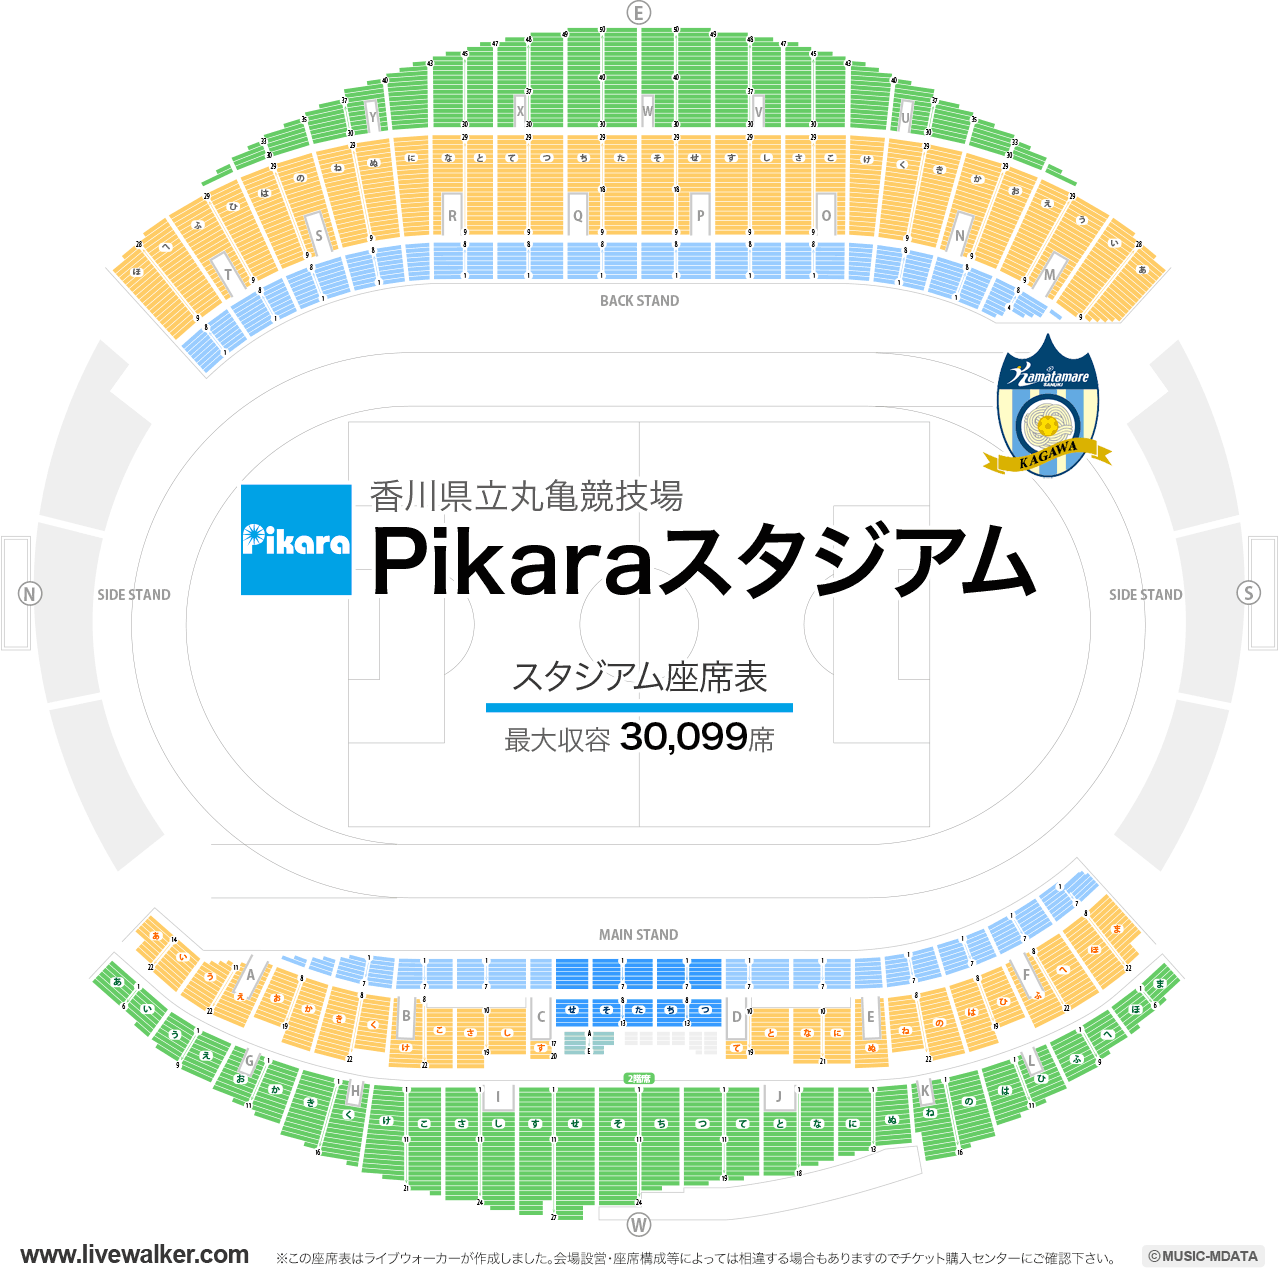 Pikaraスタジアムの座席表